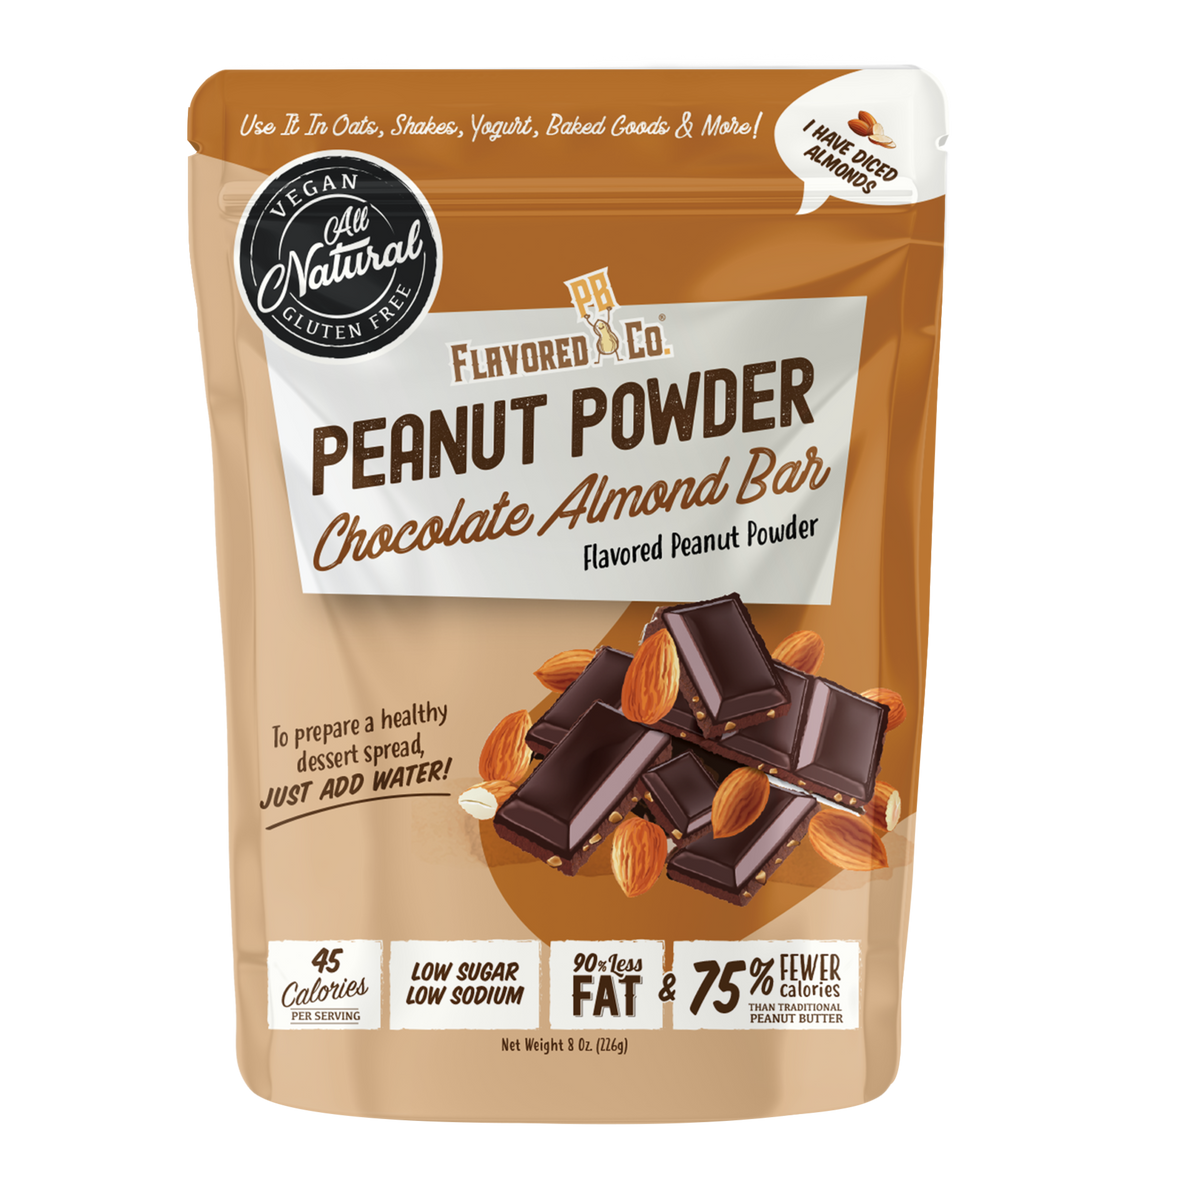 Chocolate Almond Bar Flavored Peanut Powder